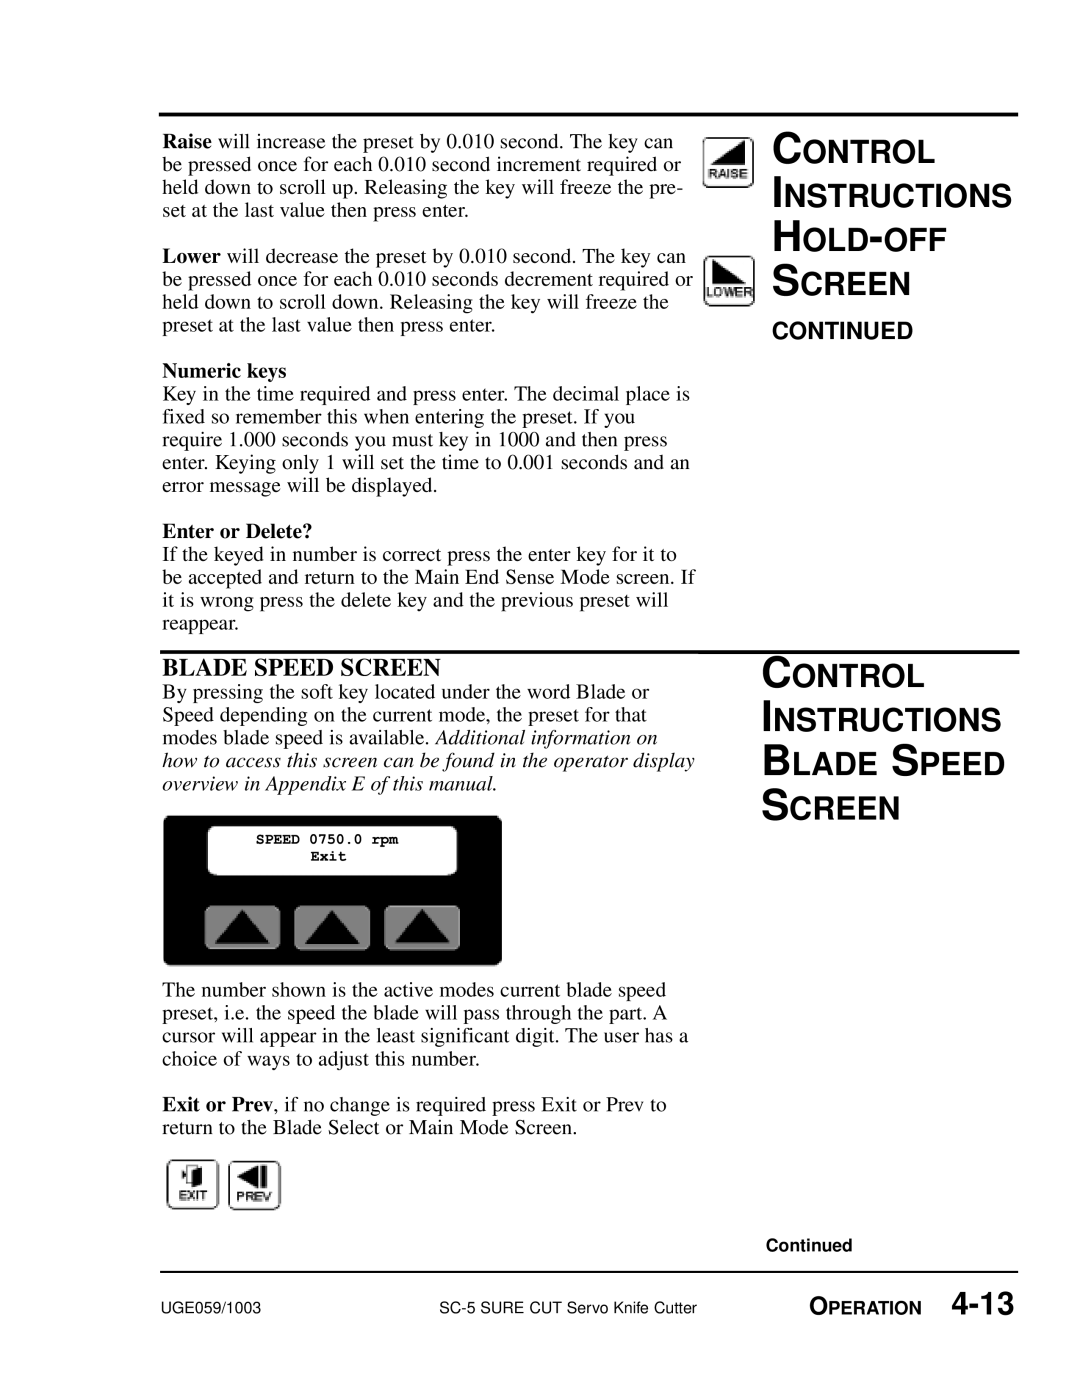 Conair SC-5 manual SPEED0750.0rpm, Control Instructions Blade Speed Screen, Control Instructions Hold-Off Screen, Continued 